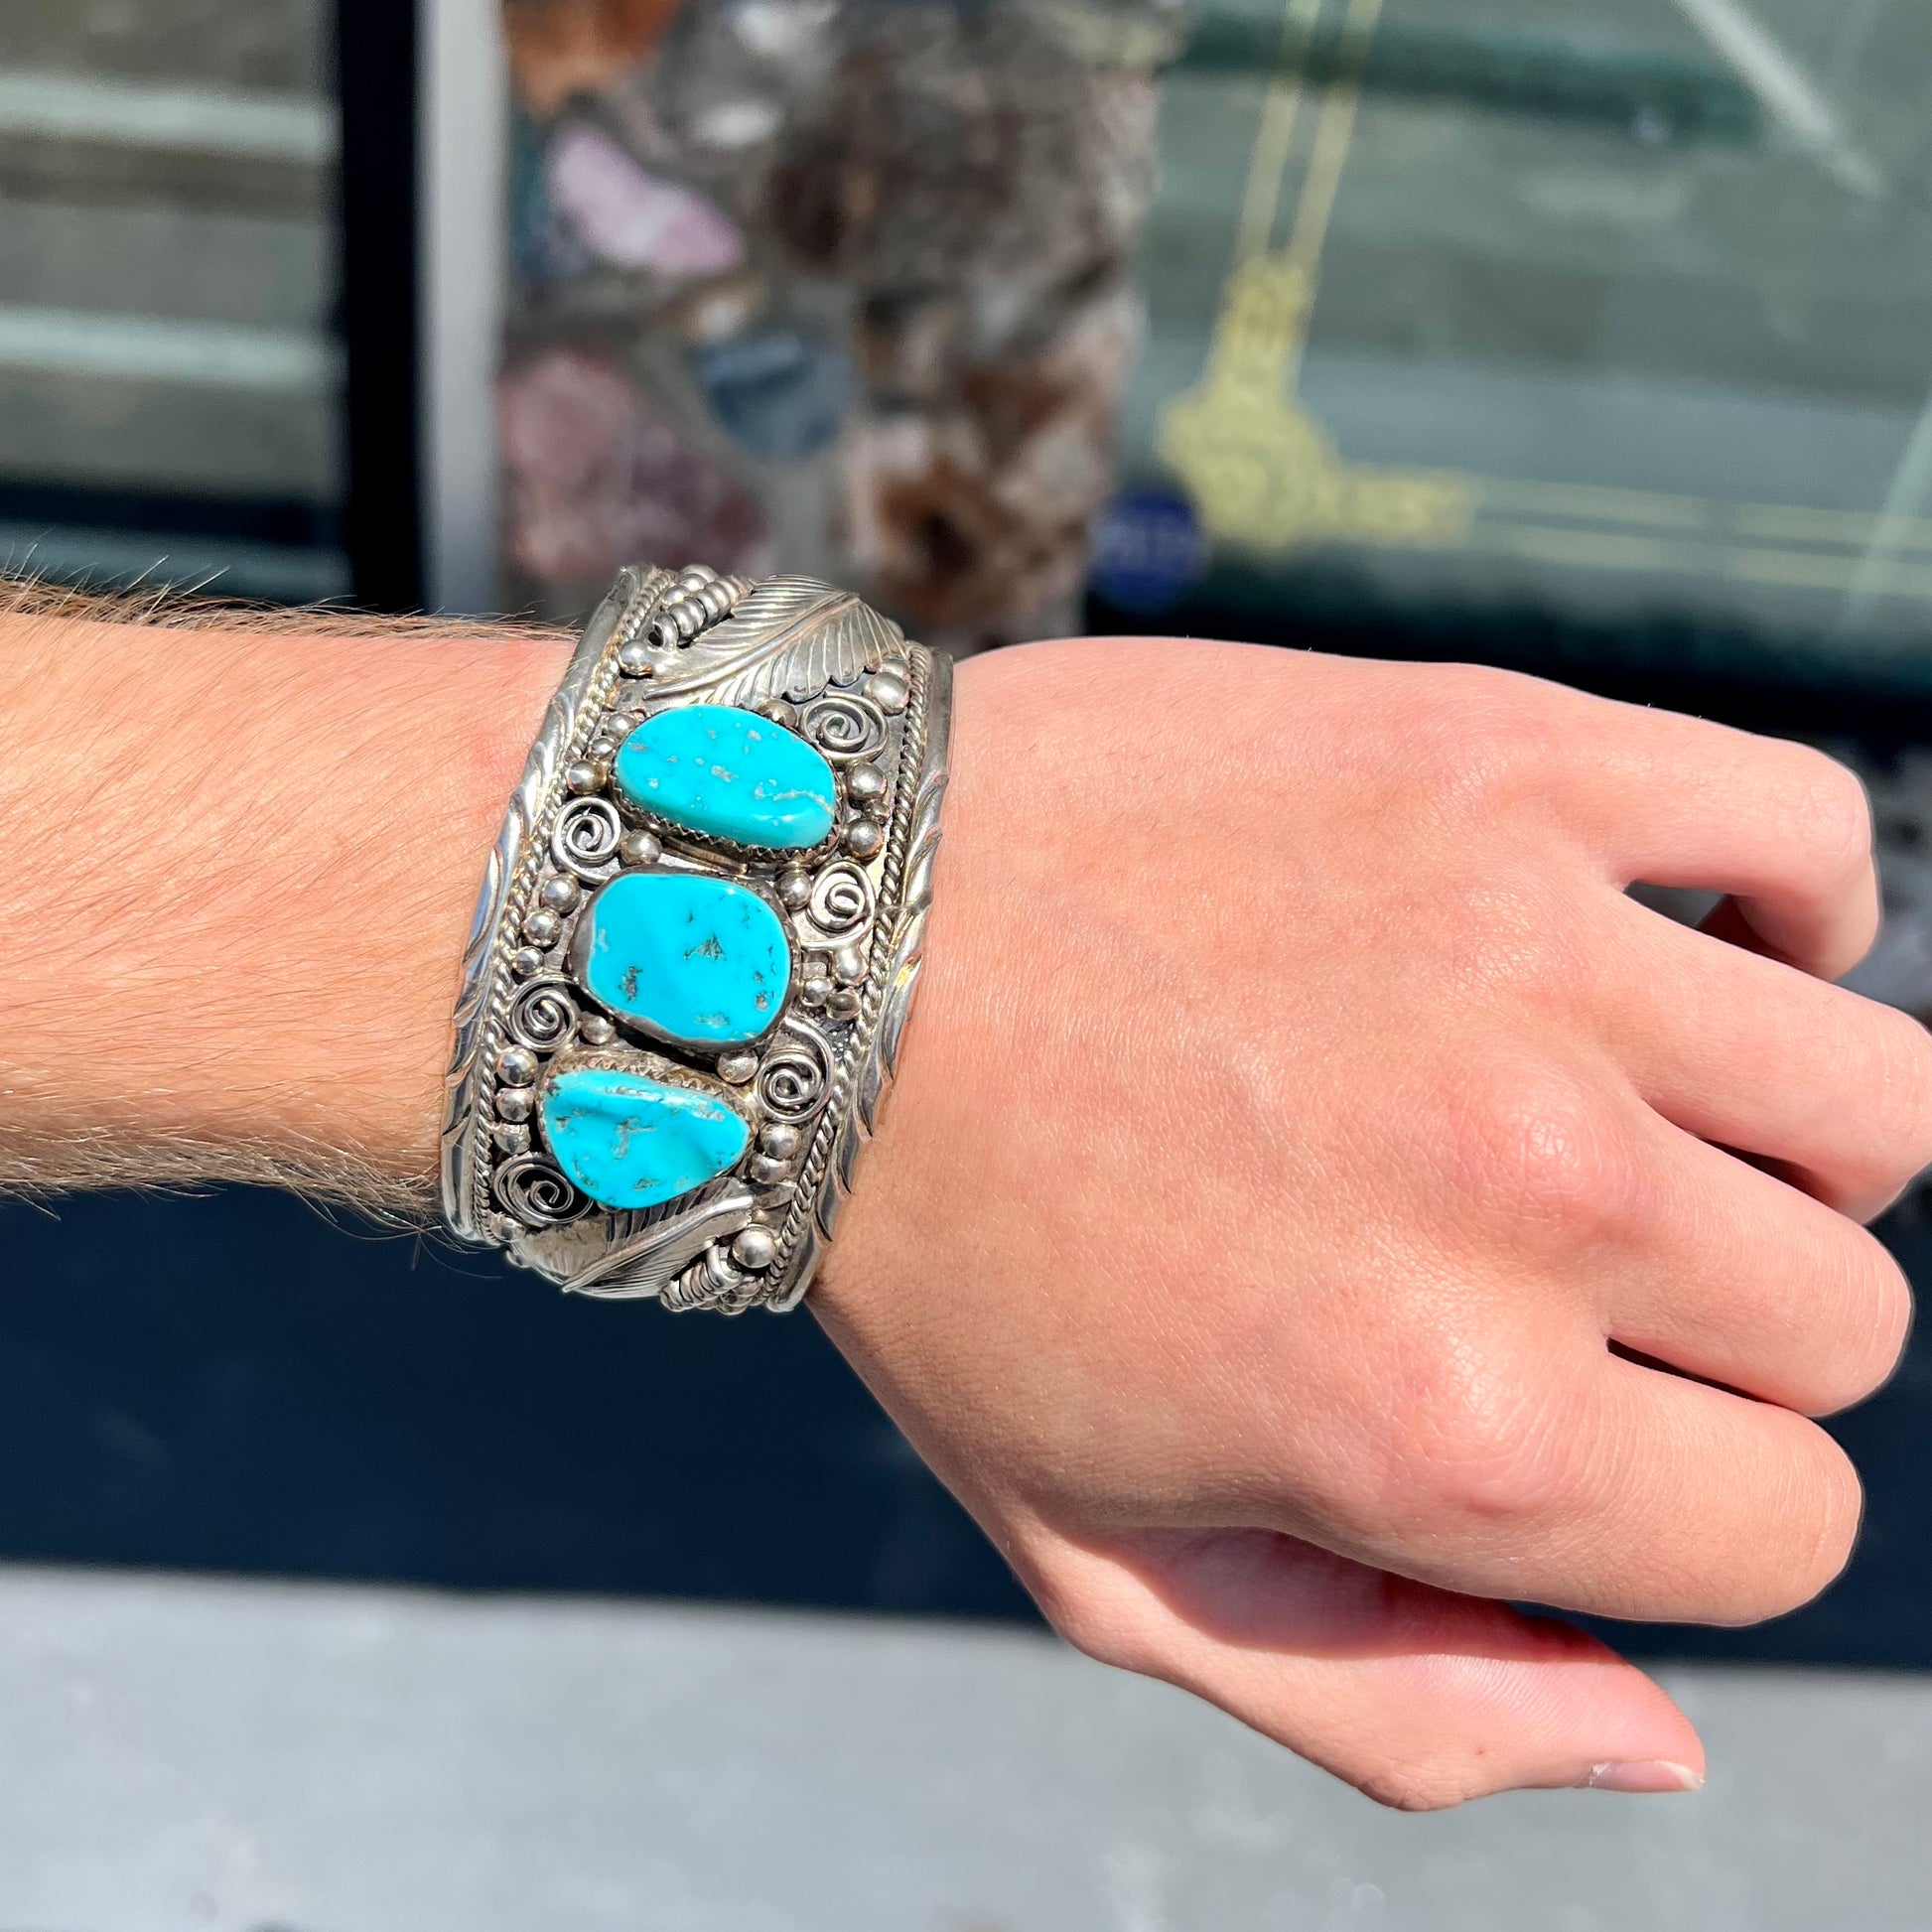 Burton's Imitation Turquoise Cuff Bracelet